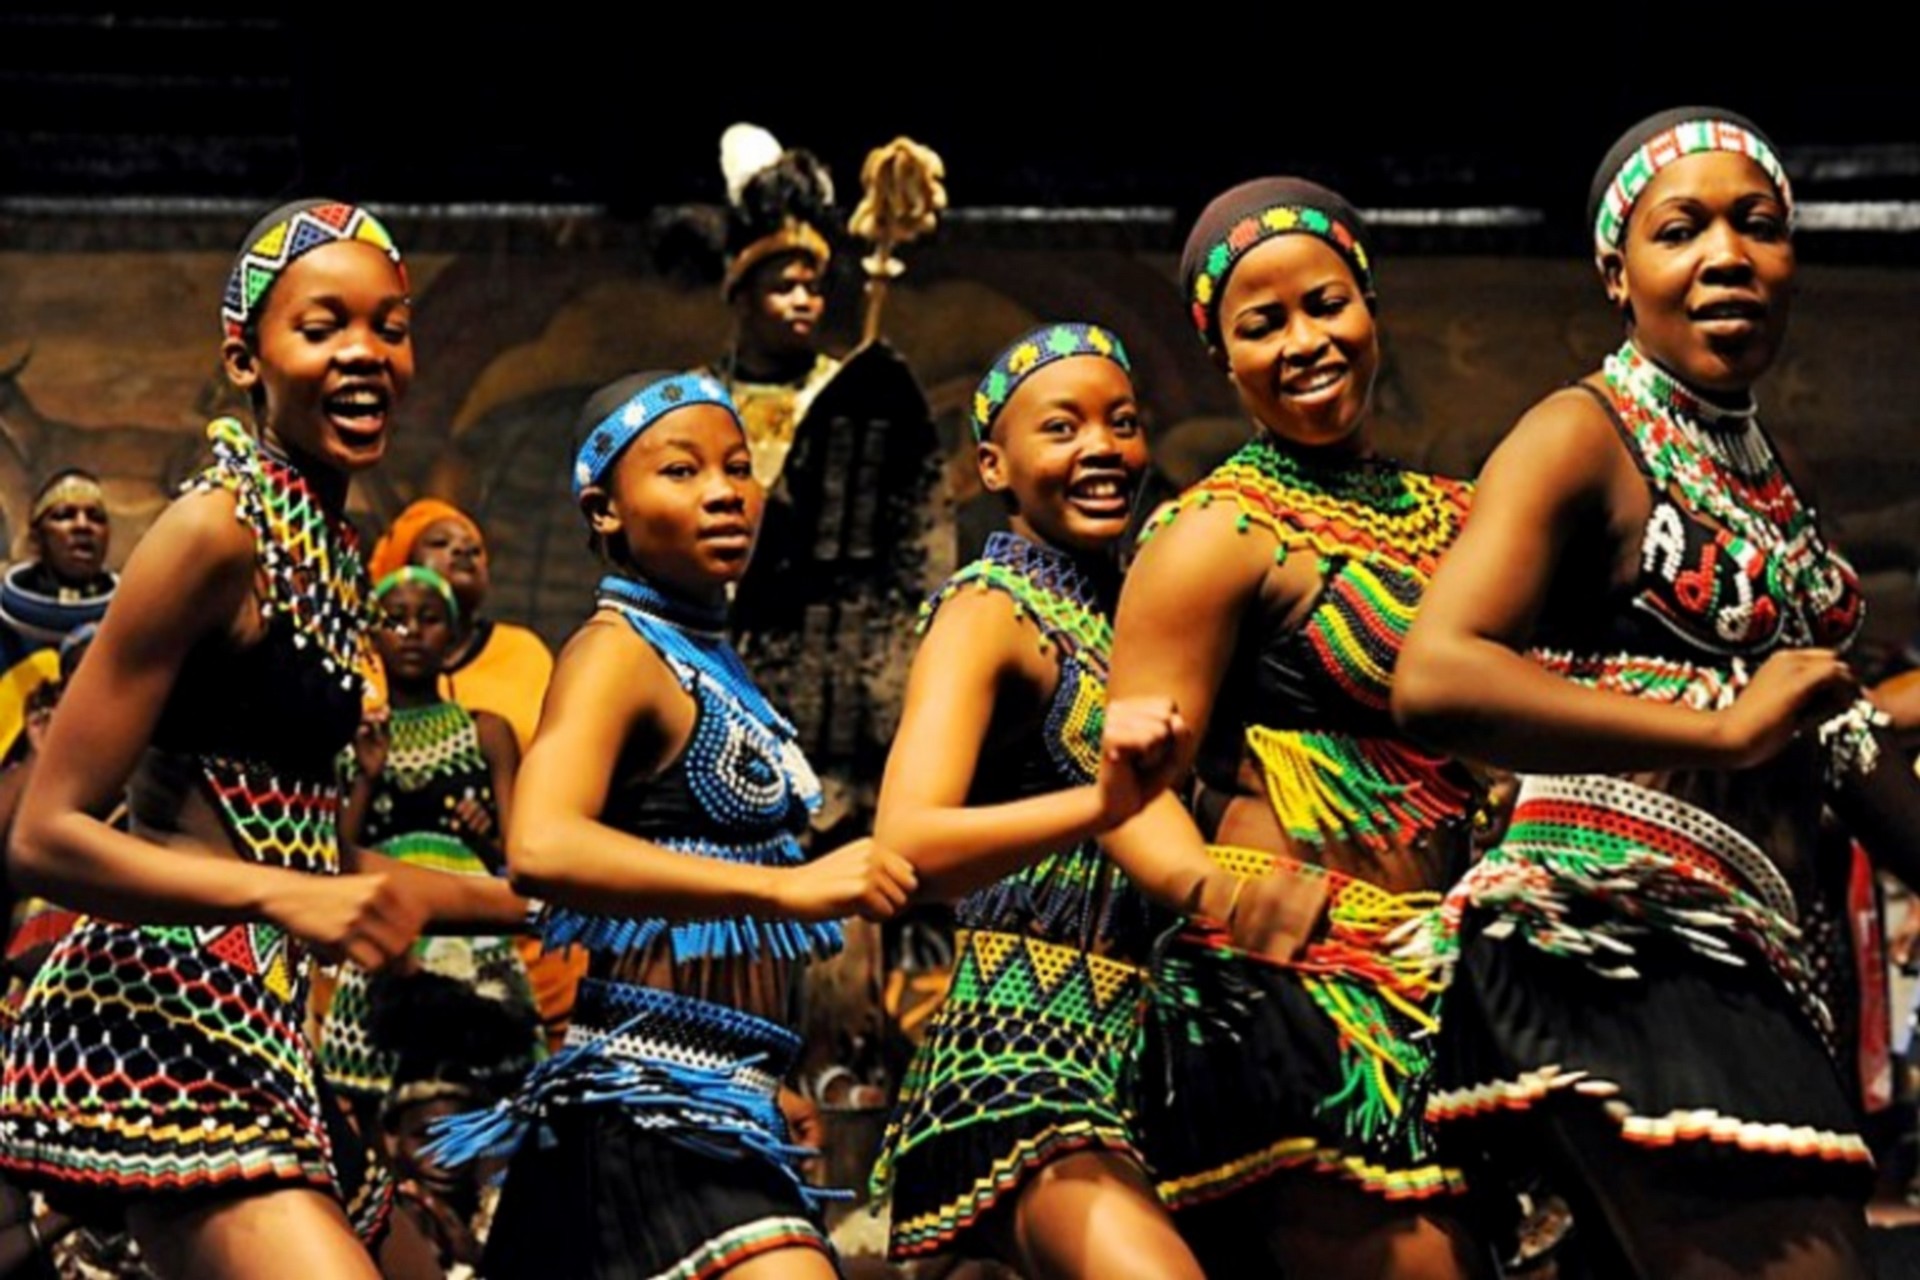 Tribe s. Африканские танцы. Танцы народов Африки. Танцы африканцев. Африканцы танцуют.